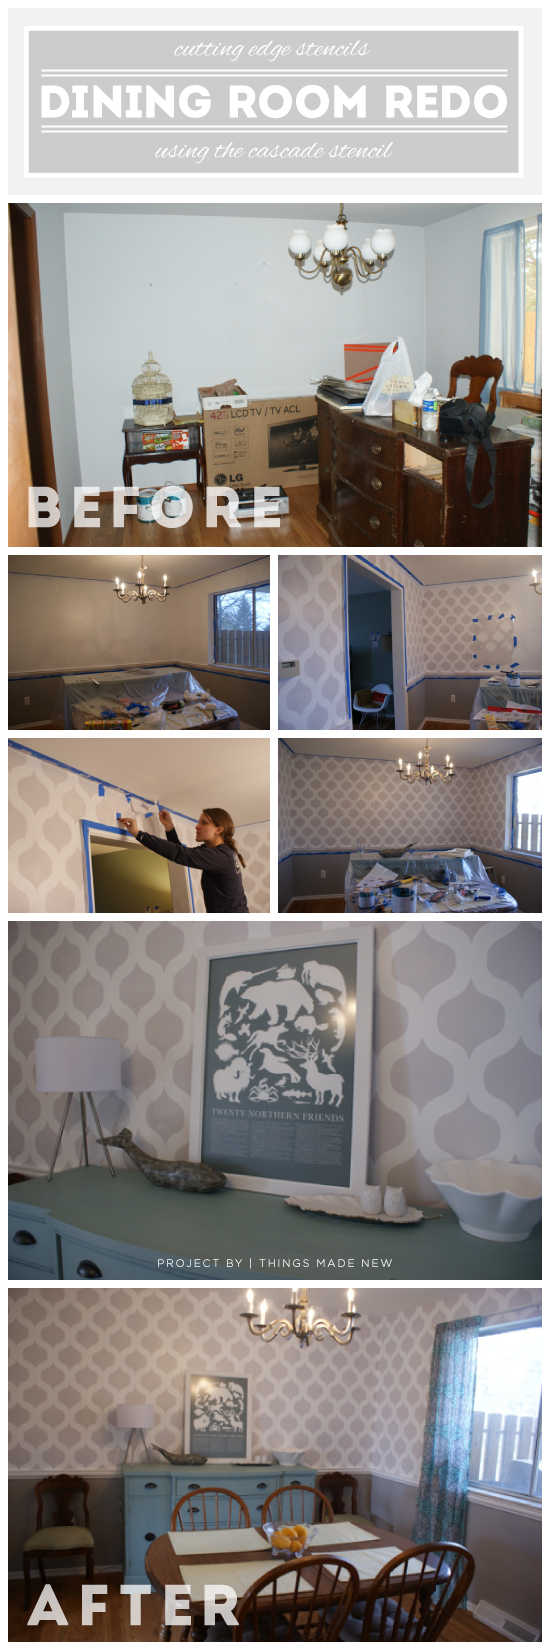 A DIY stenciled dining room using the Cascade Stencil for a wallpaper look. http://www.cuttingedgestencils.com/cascade-allover-stencil-pattern.html